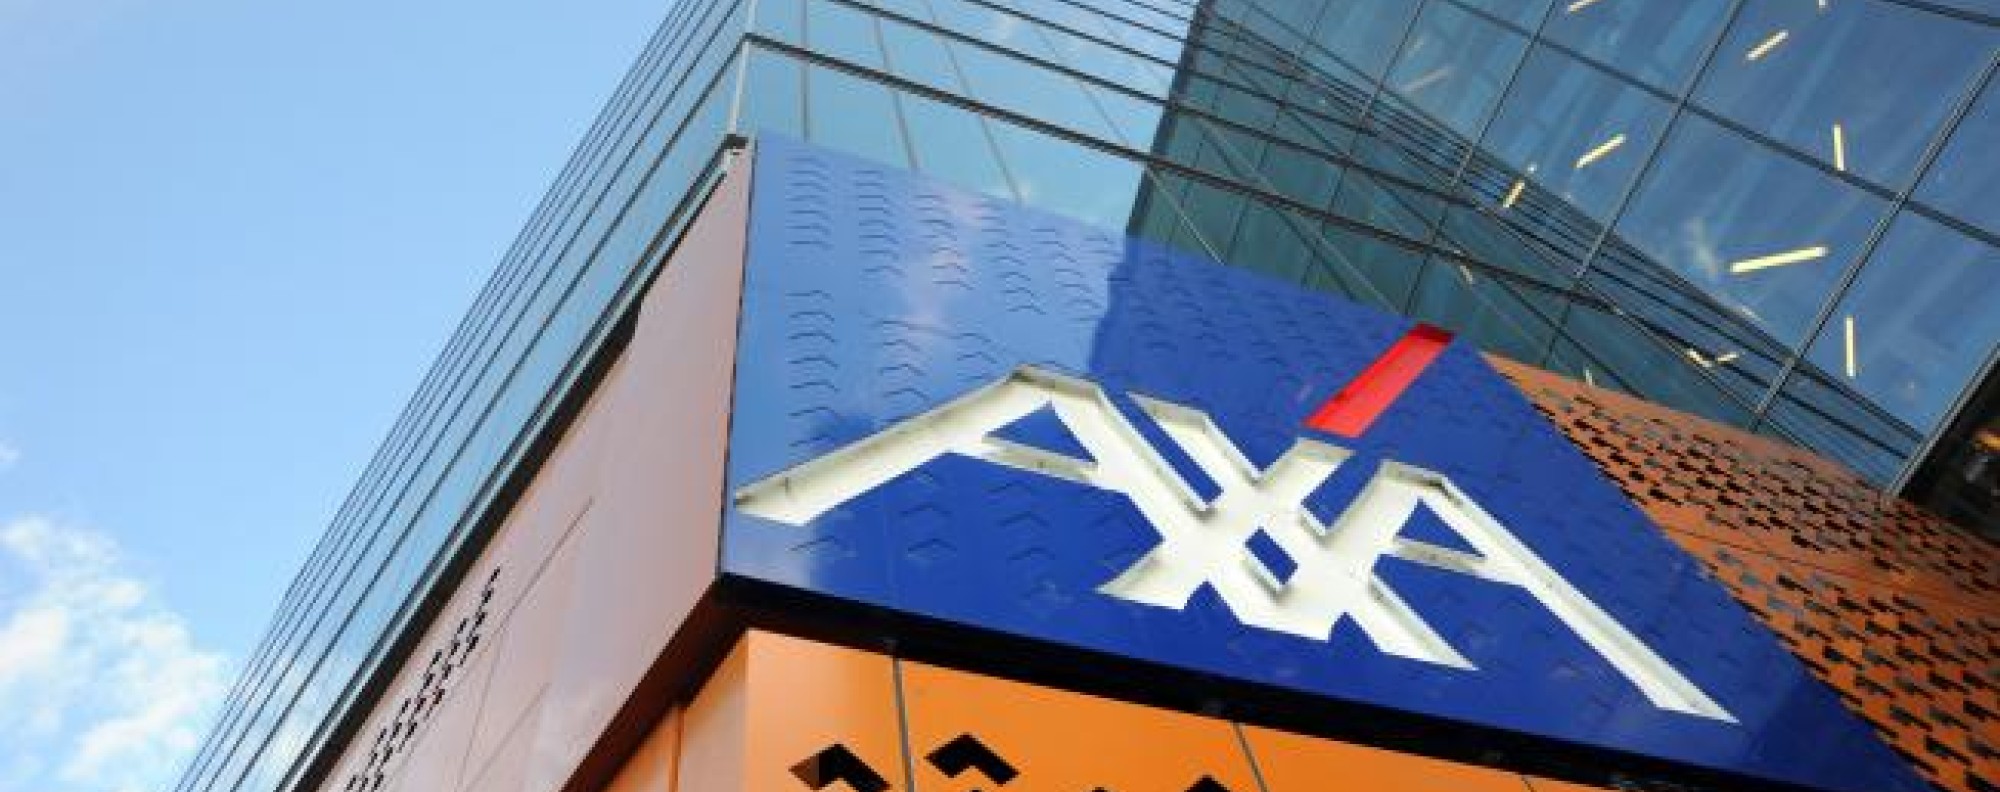 drempel beweging tarwe AXA buys into Shanghai car insurer Tianping | South China Morning Post